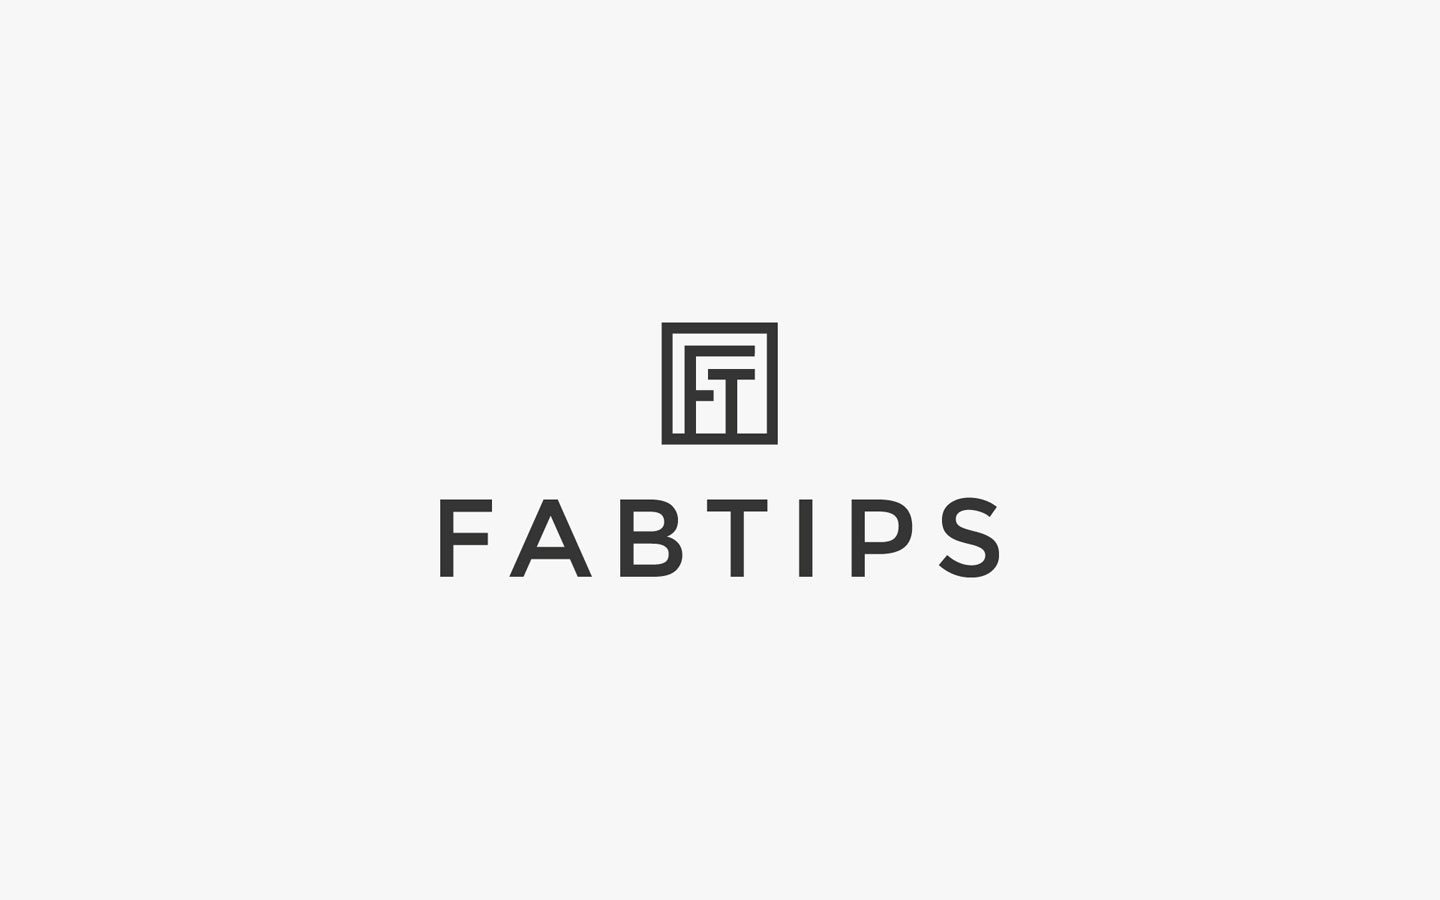 FabTips Luxury Blogzine, Logo Design in Mono